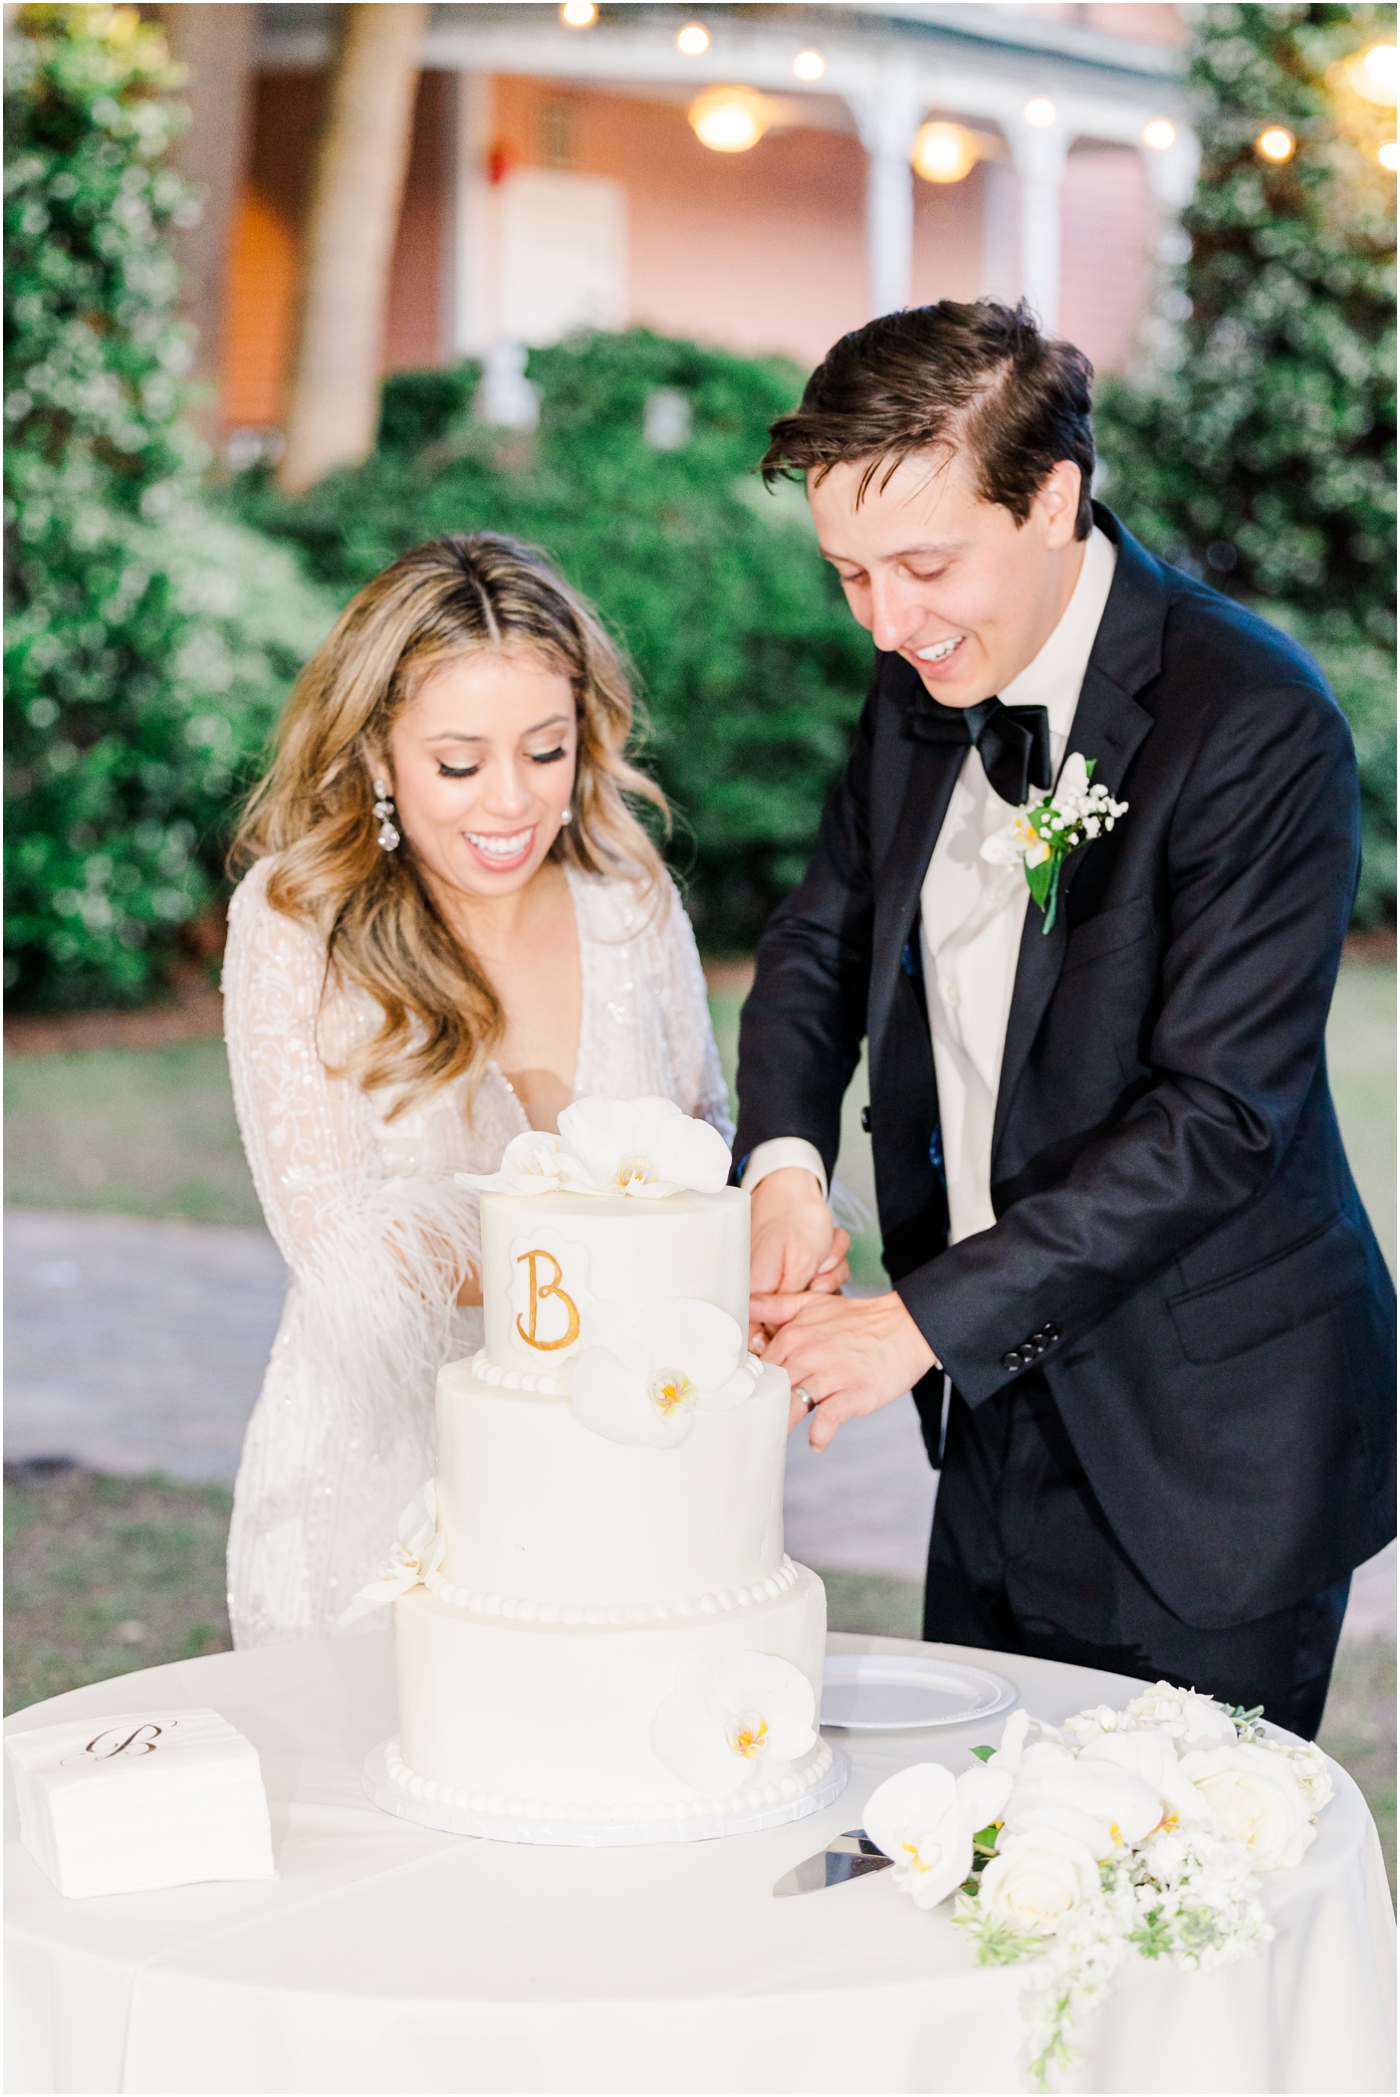 Bride & Groom cutting the cake at their Beaufort Inn wedding in the tabby garden 